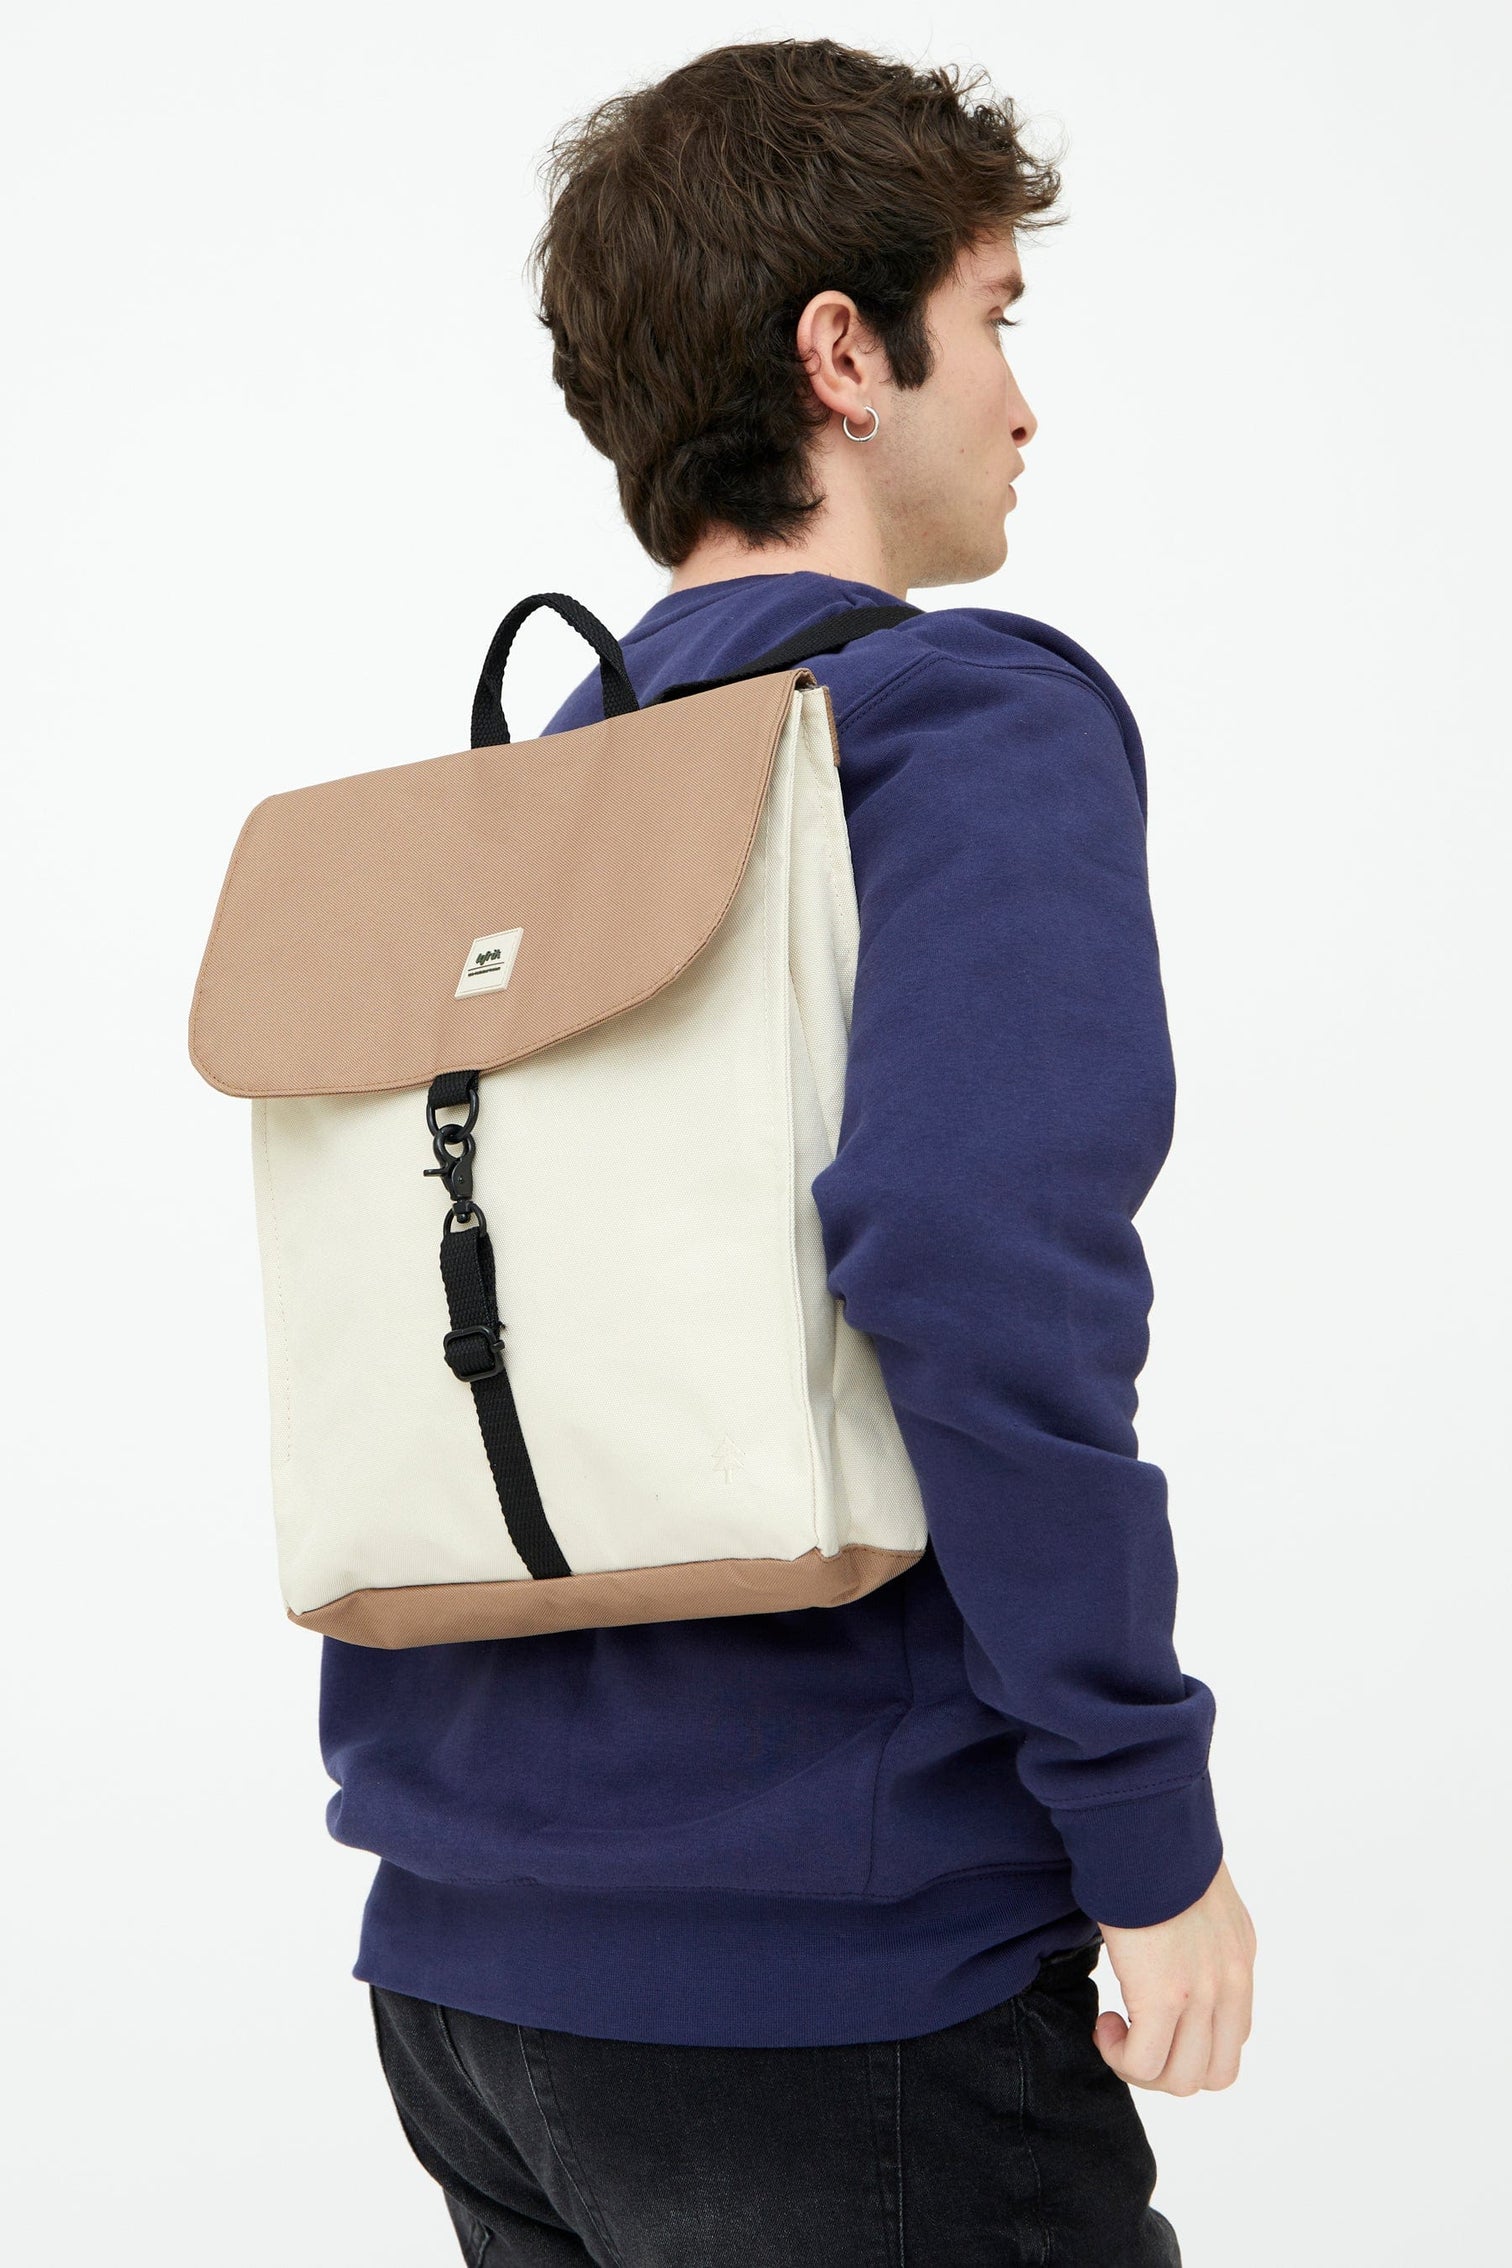 Lefrik - Handy Mini Skog - Hook Backpack